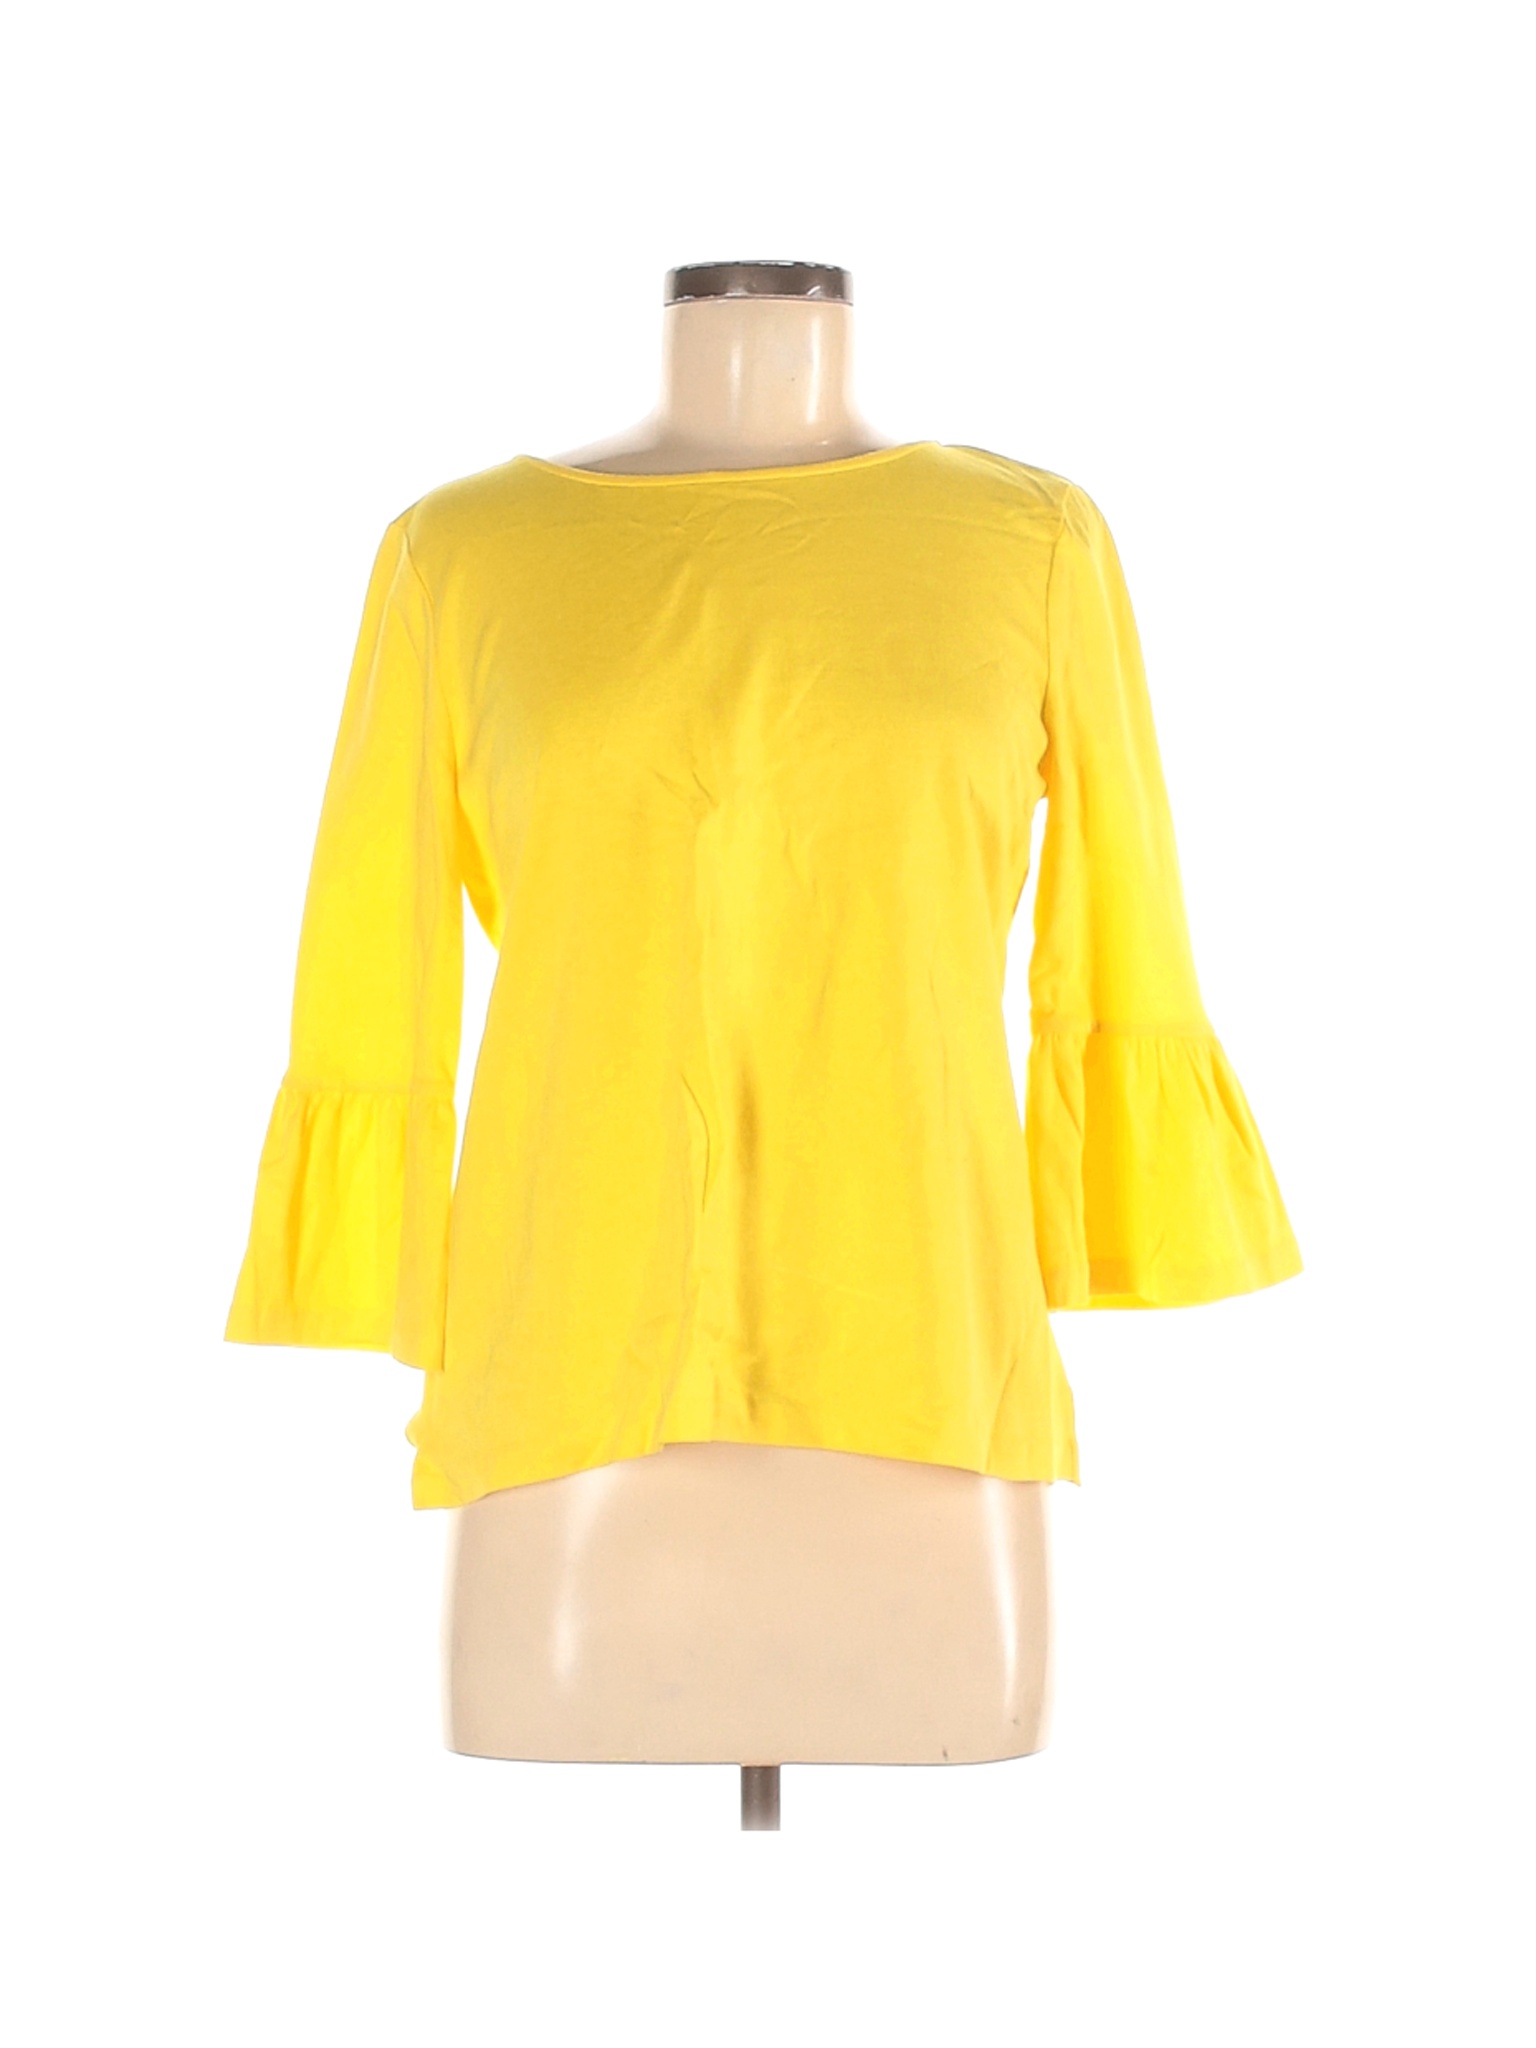 Talbots Women Yellow 3/4 Sleeve Top M | eBay